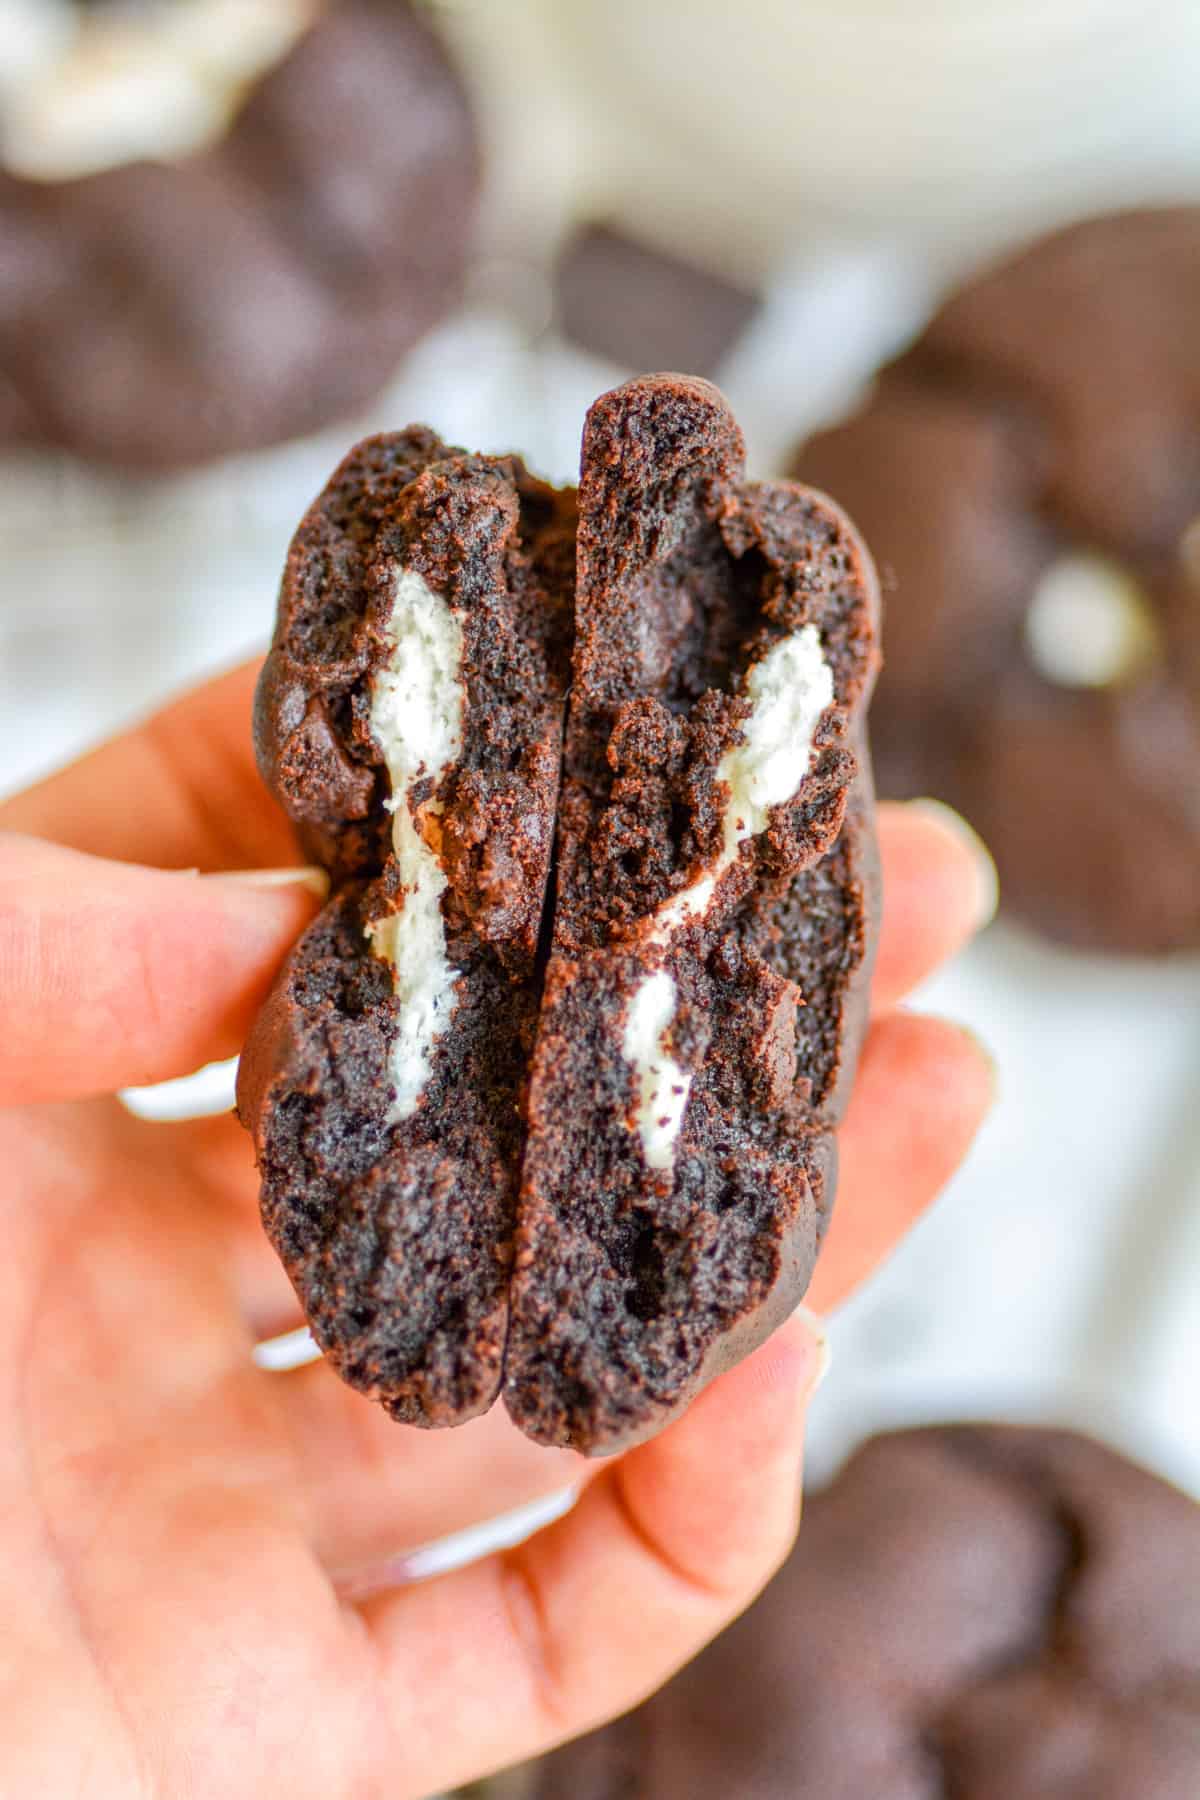 A hand holding a broken open Dark Chocolate Marshmallow cookie